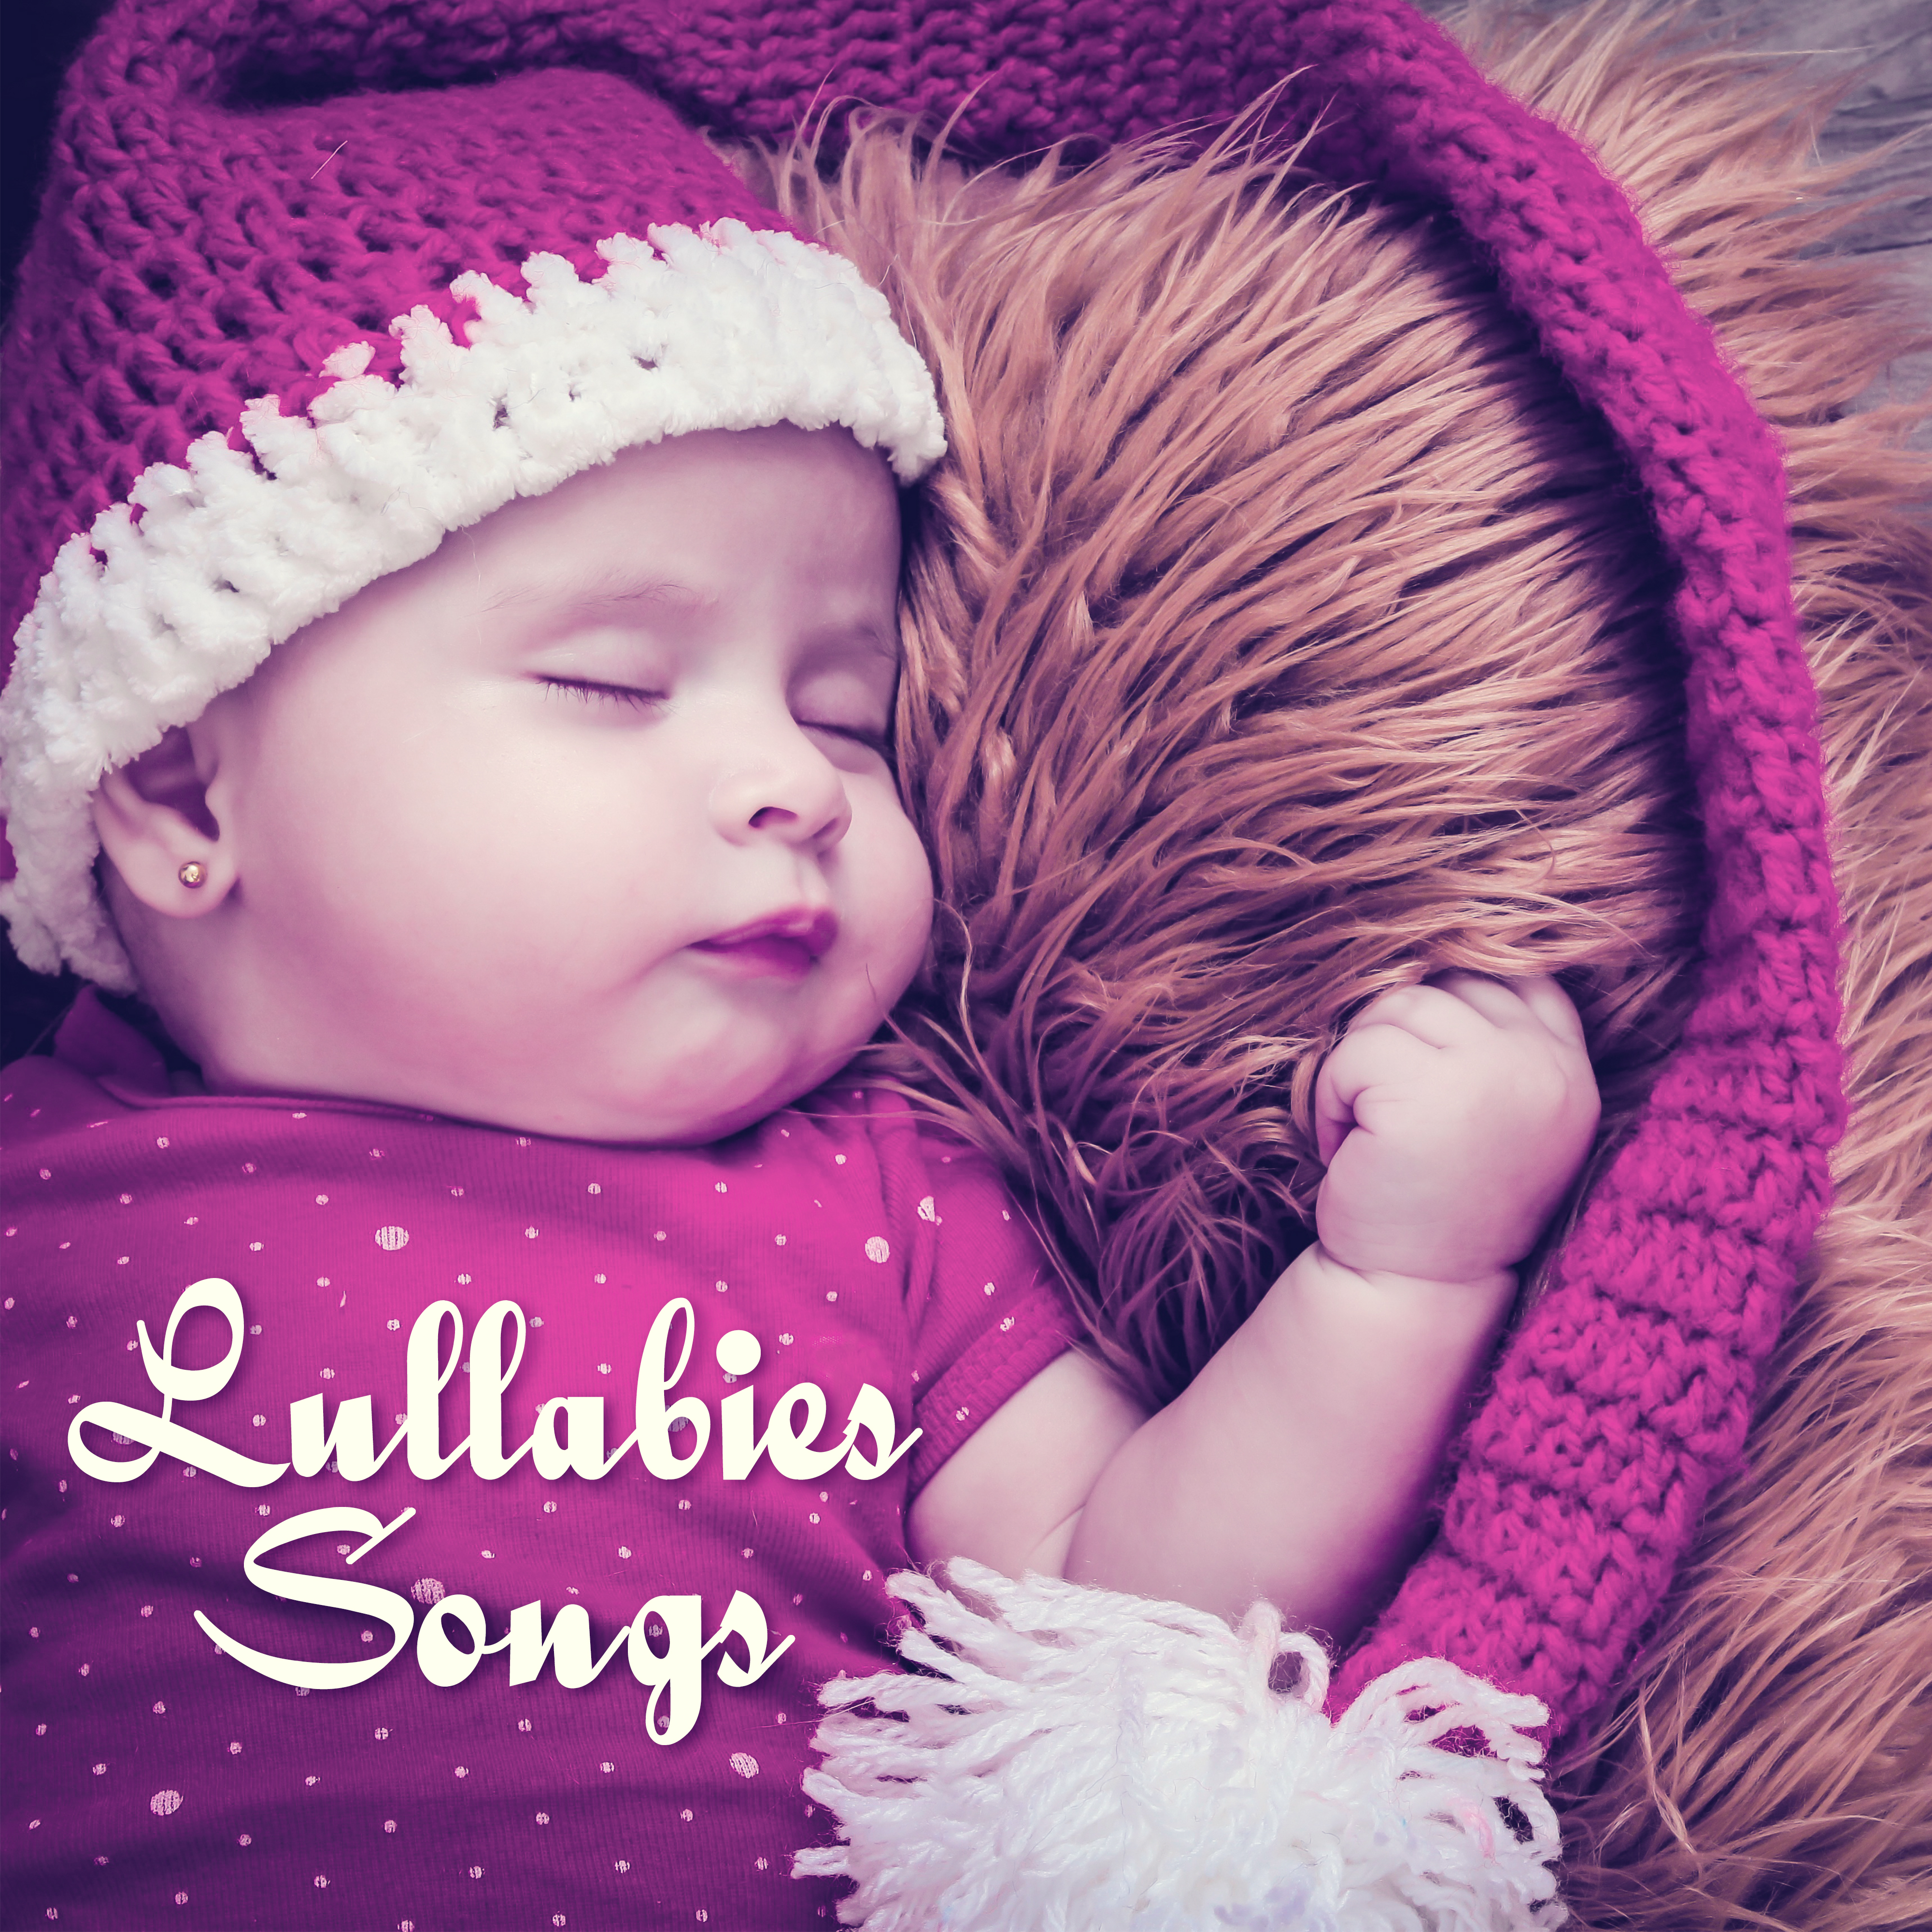 Lullabies Songs  Baby Music, Lullabies for Put to Sleep, Music for Deep Sleep, Relaxation, Stimulation Baby Development